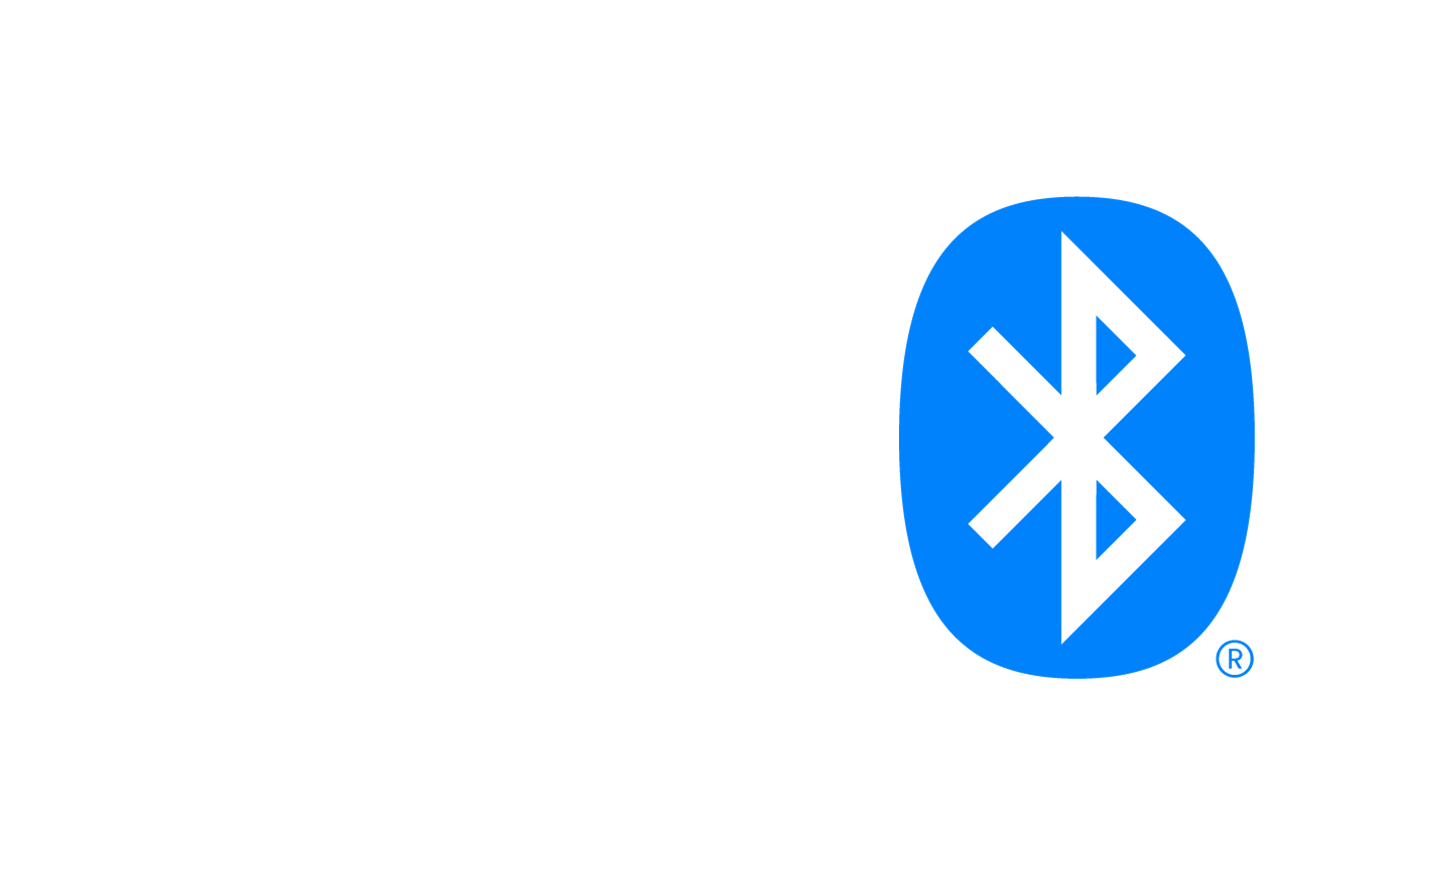 Image of a Bluetooth logo